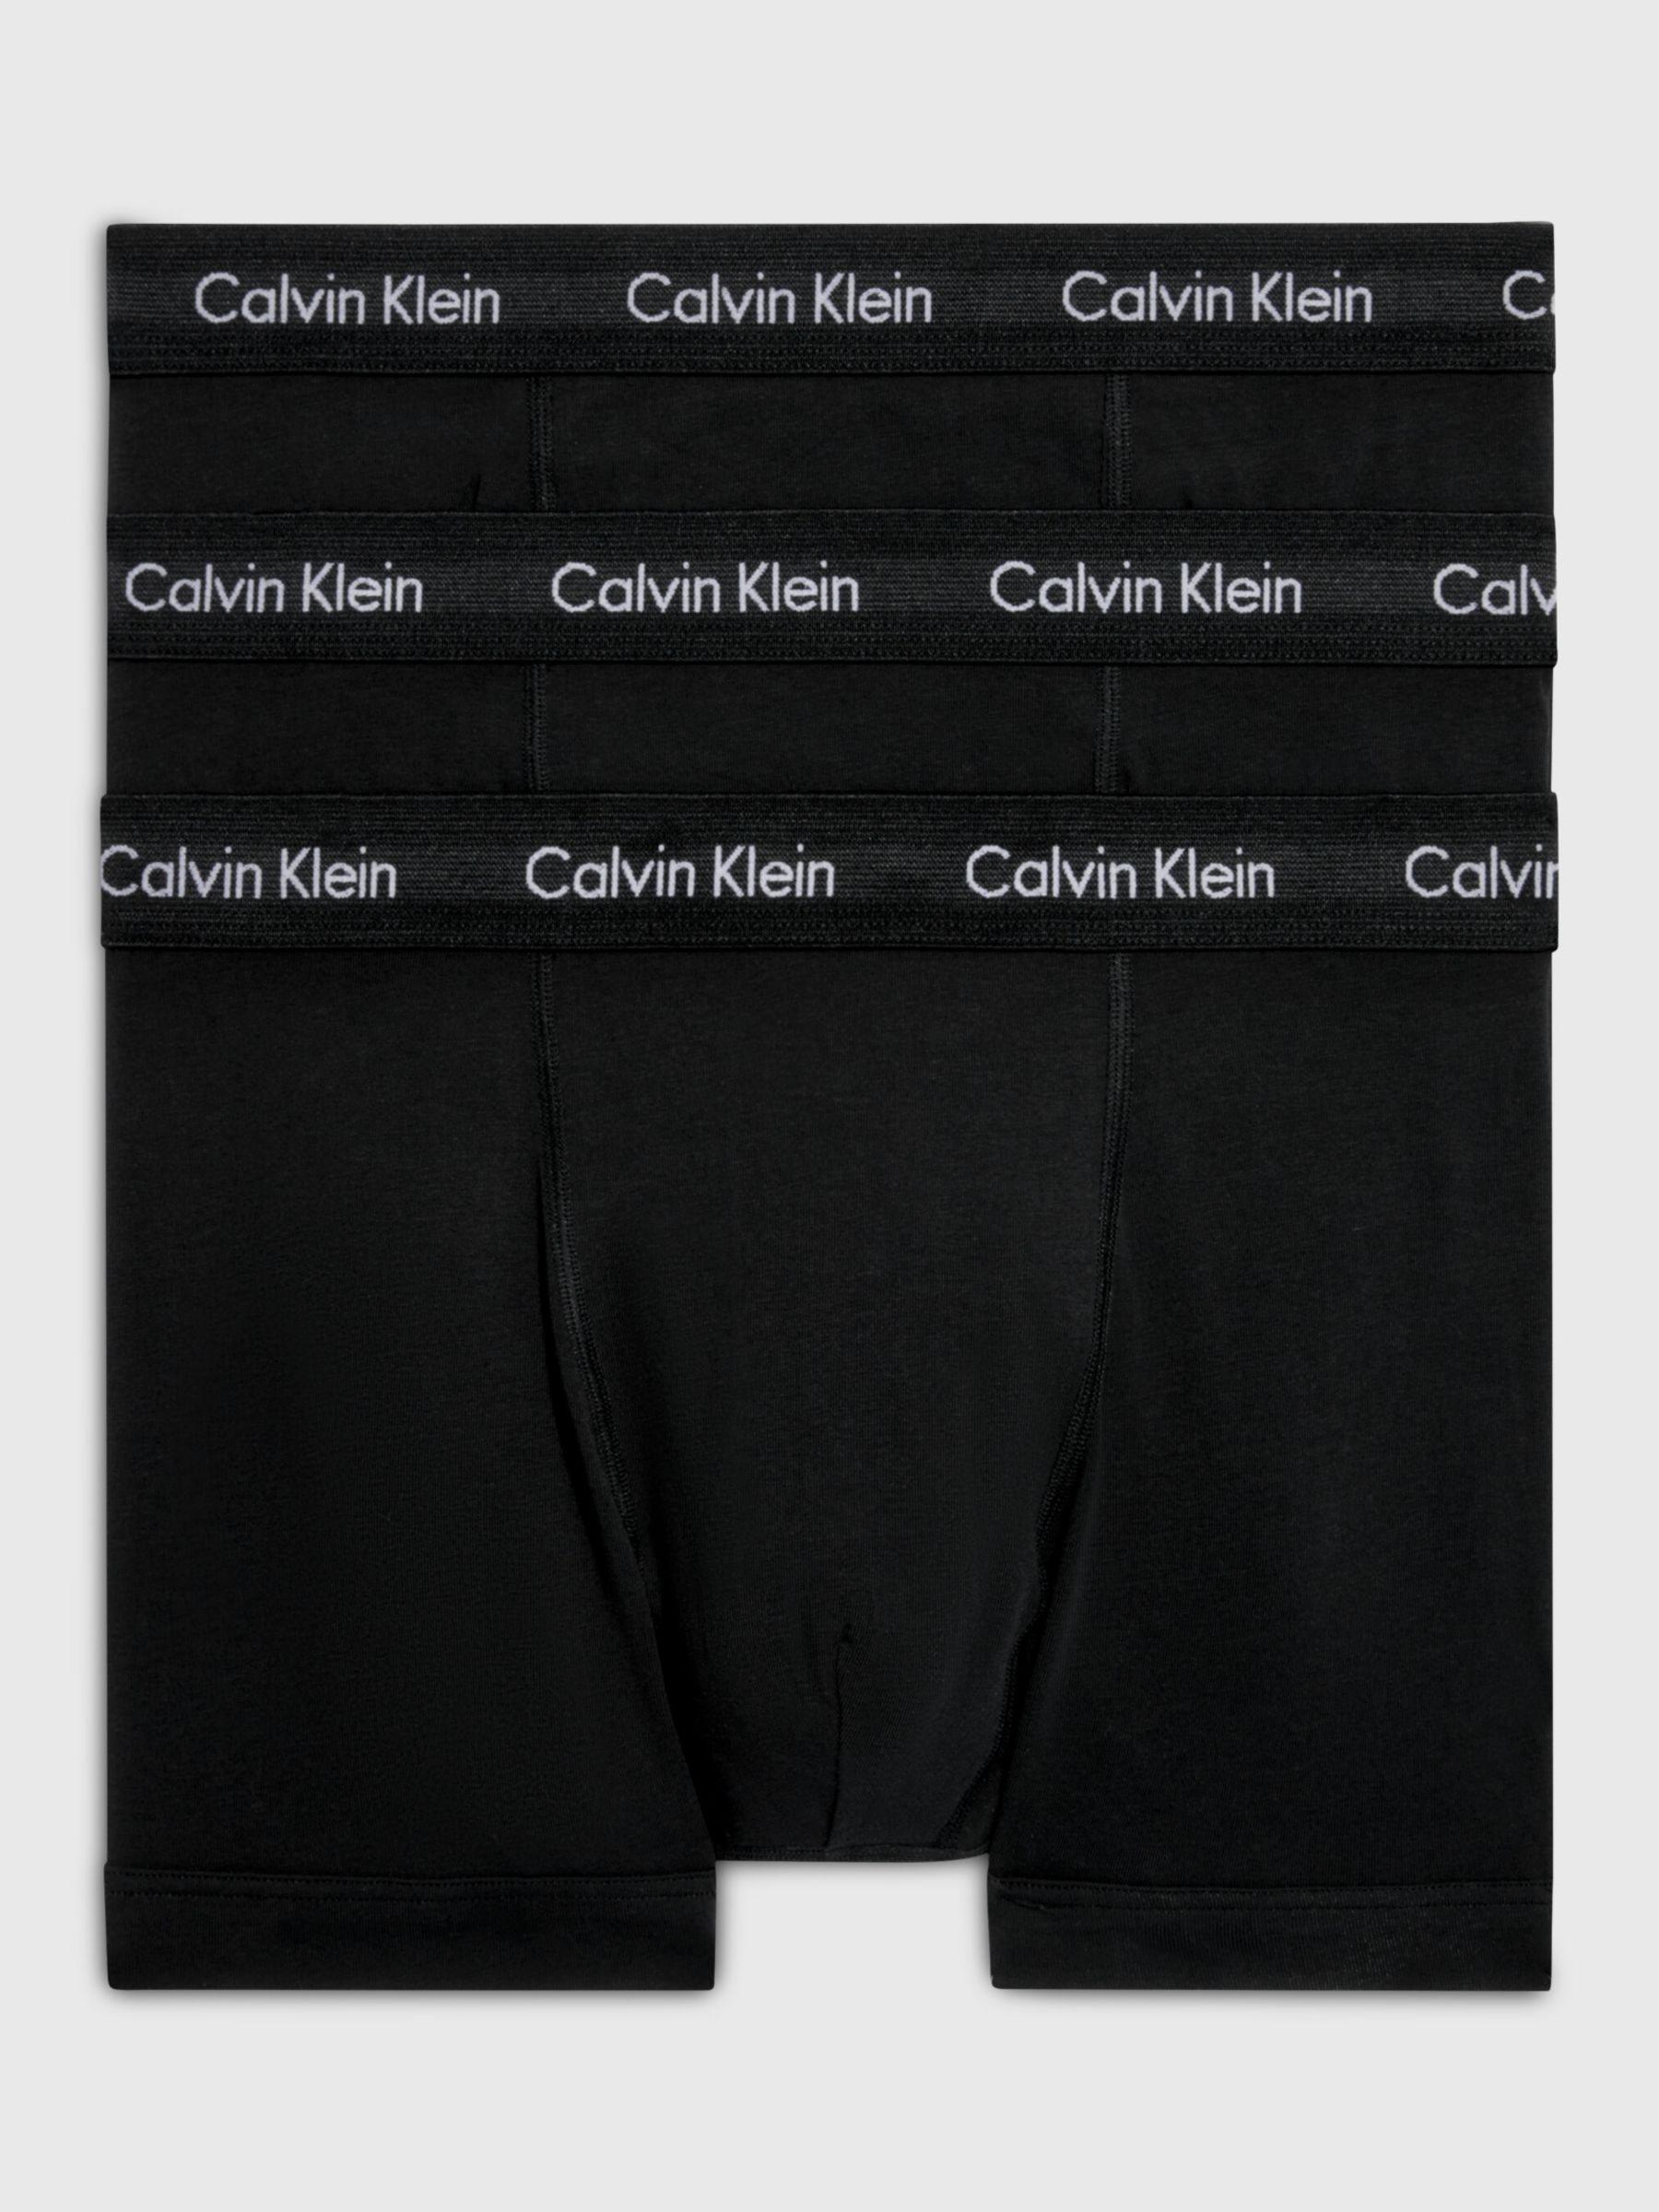 Calvin Klein Regular Cotton Stretch Trunks, Pack of 3, Black at John ...